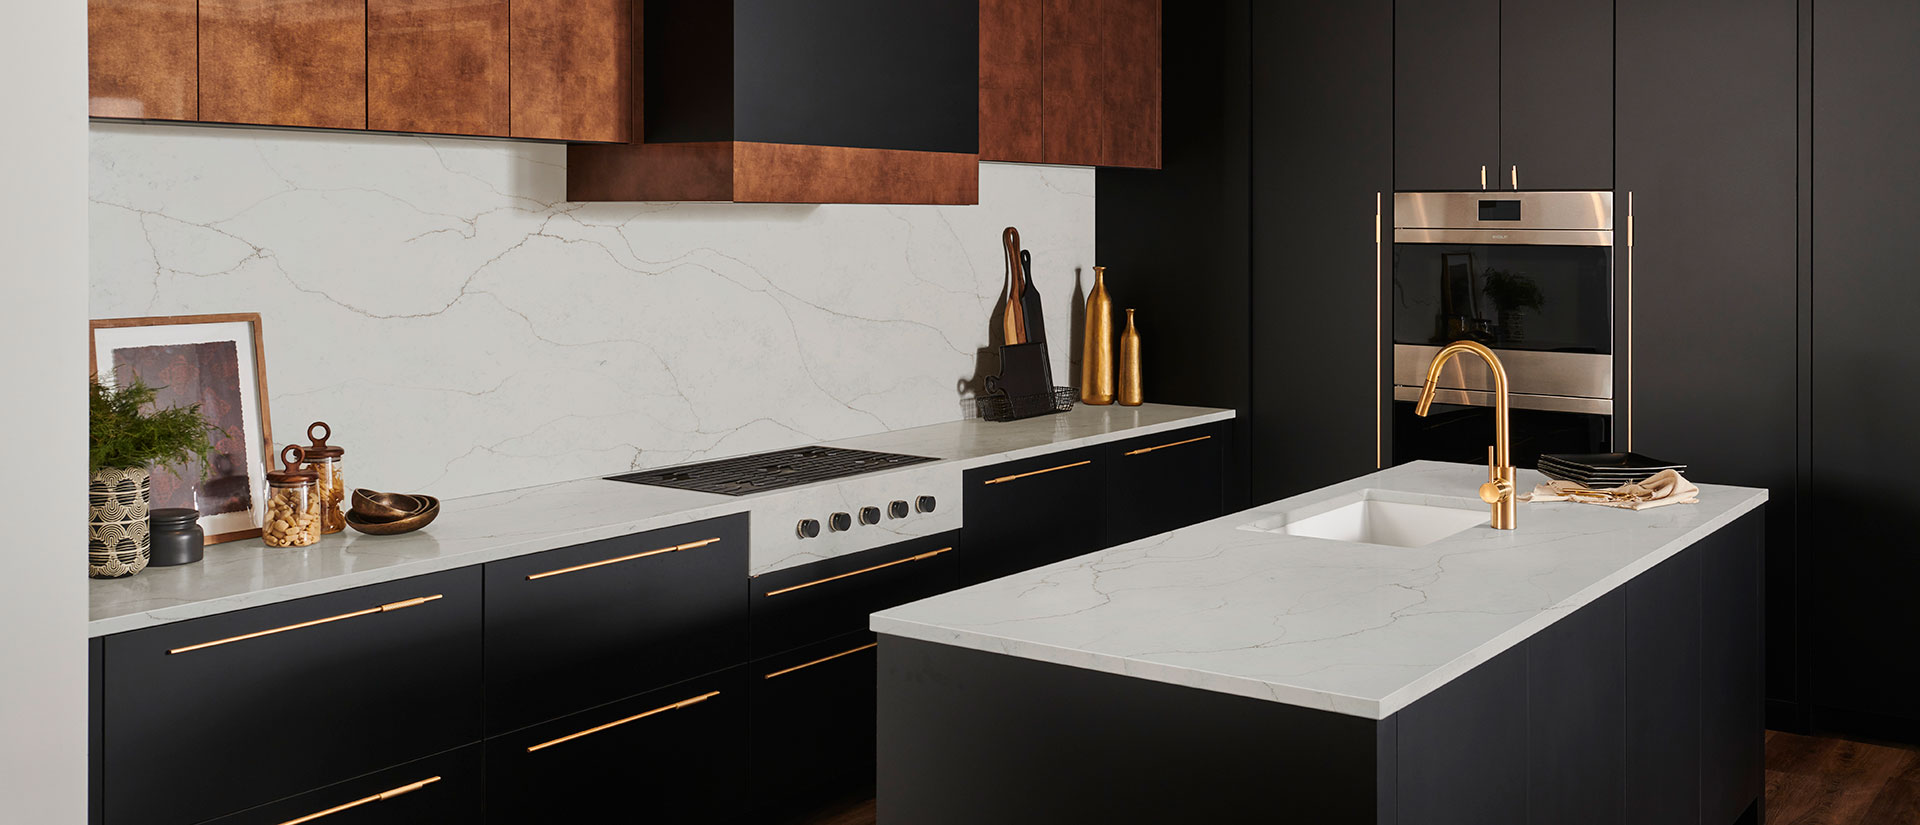 Calacatta Prado quartz countertop in a luxurious kitchen with marble backsplash